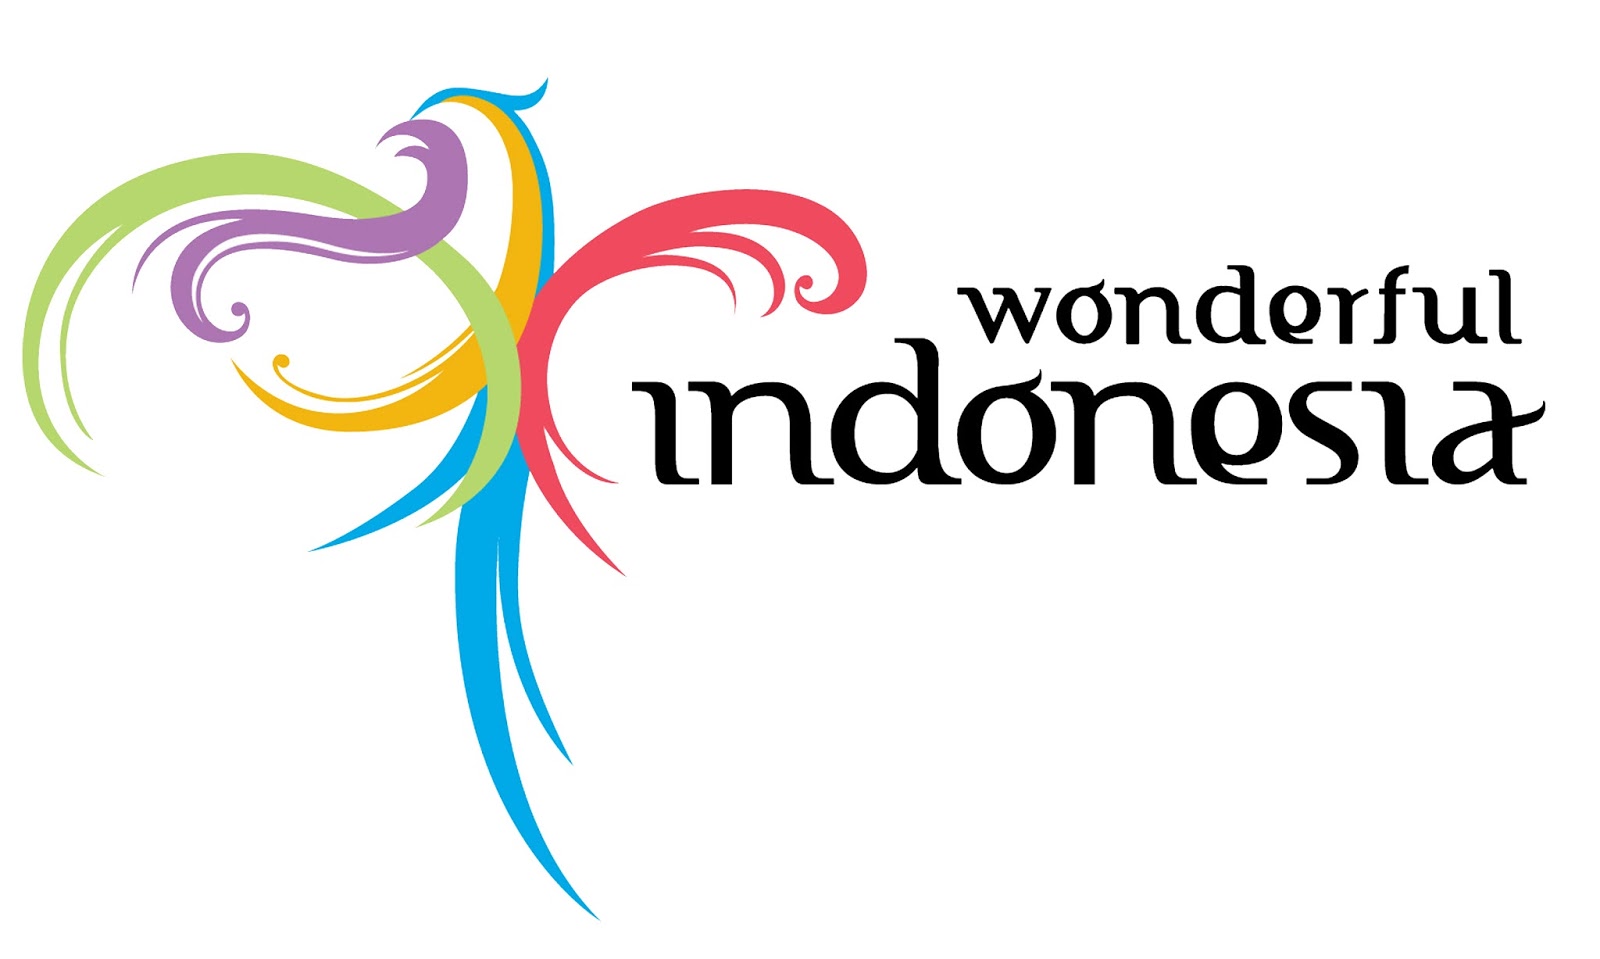 Wonderful INDONESIA